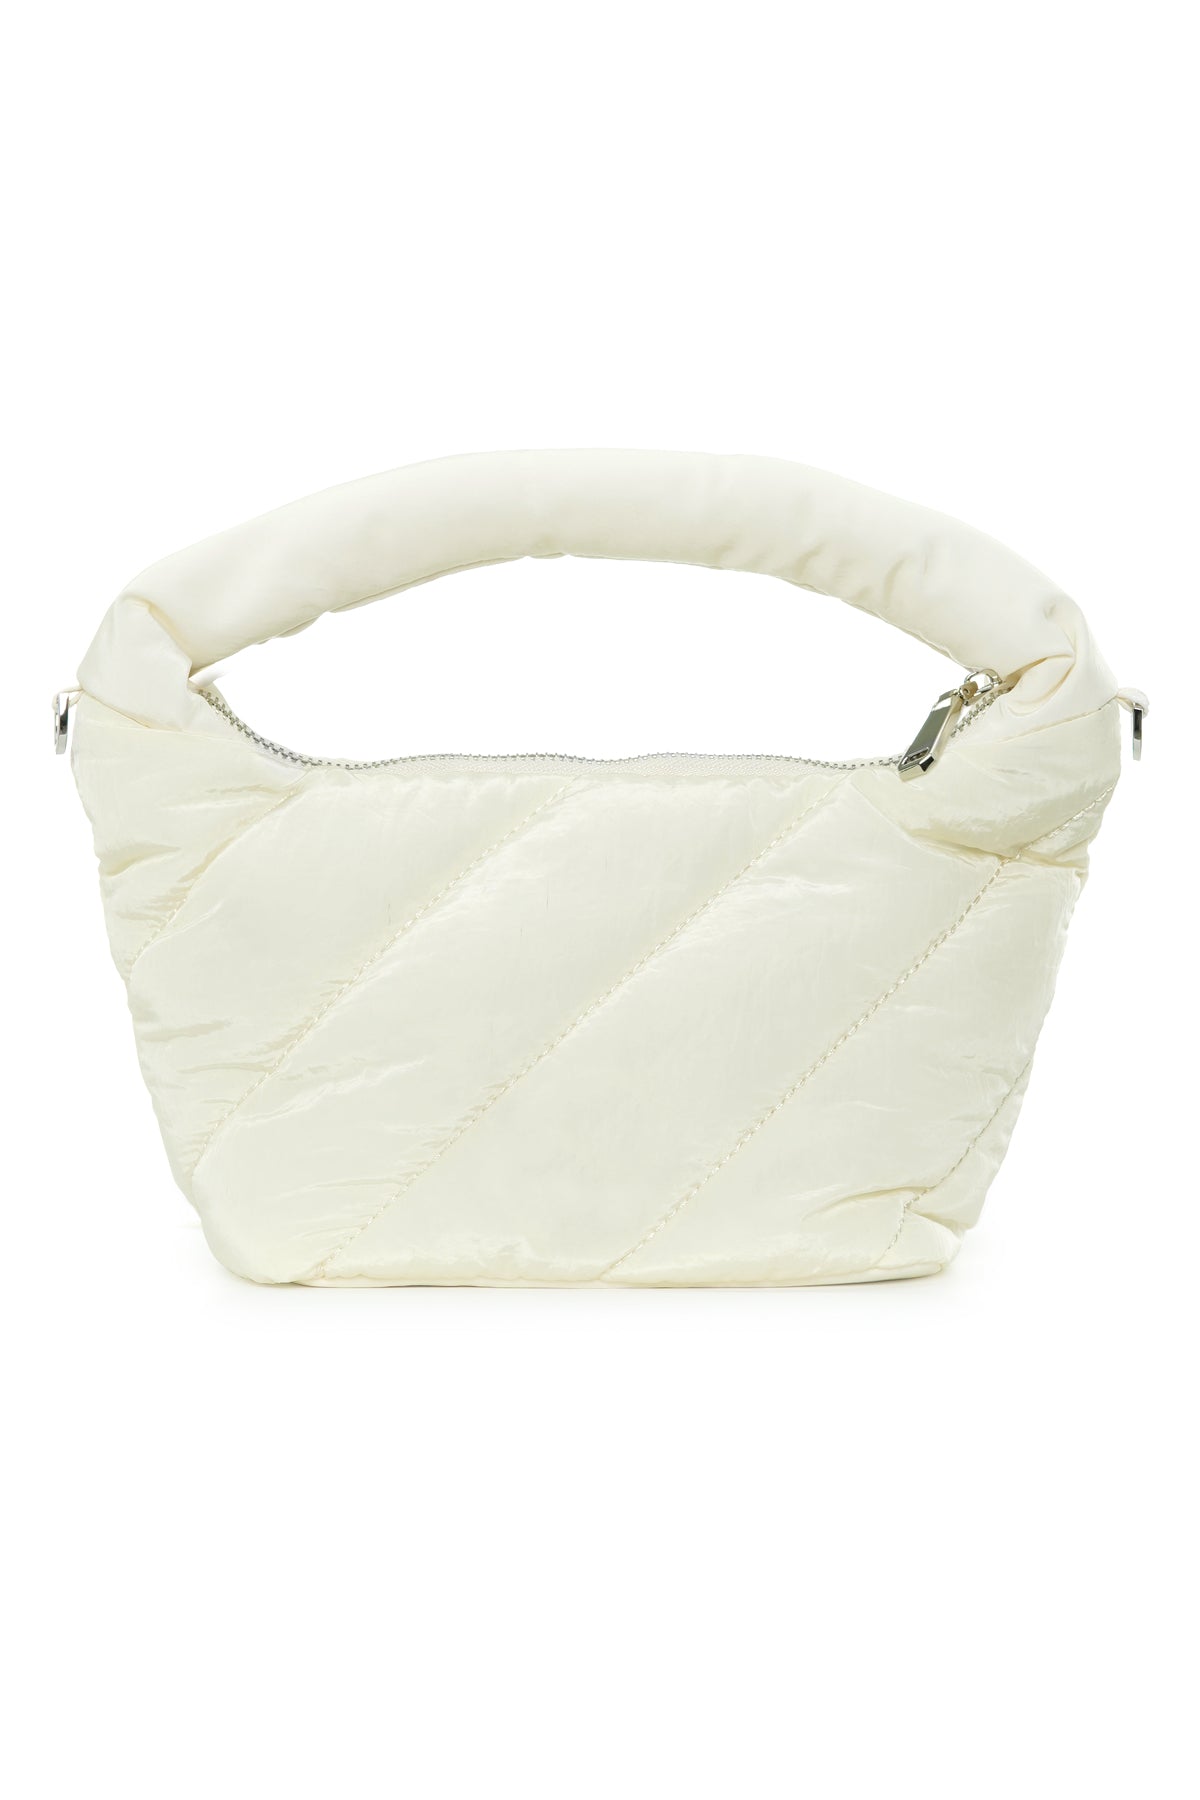 Lola Nylon Bag - Cream